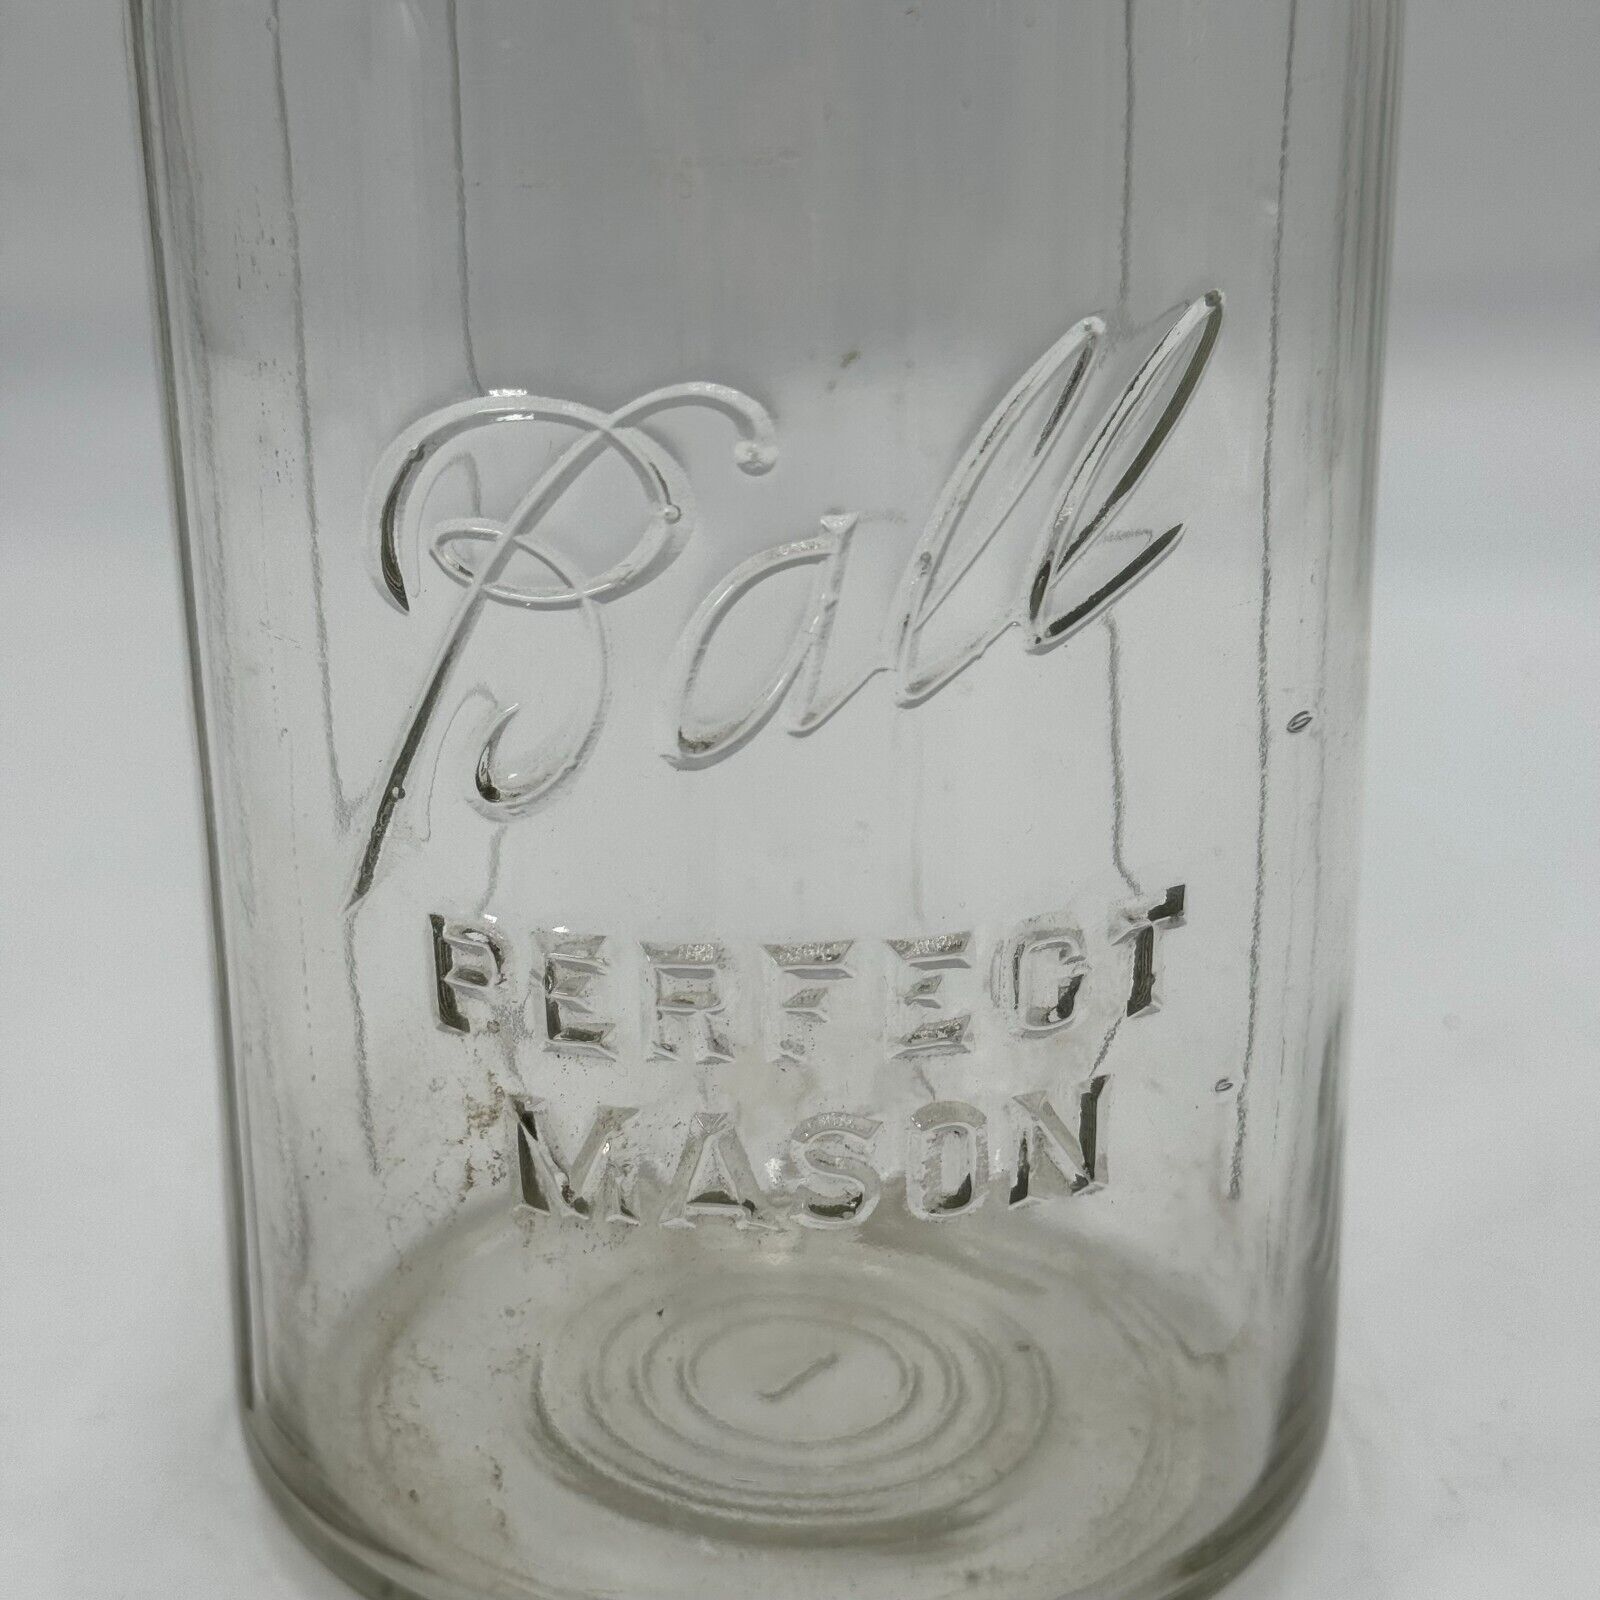 Mixed Lot of 3 Vintage Mason Jar Glass Canning Super Le Parfait Jar Ball 8-11"